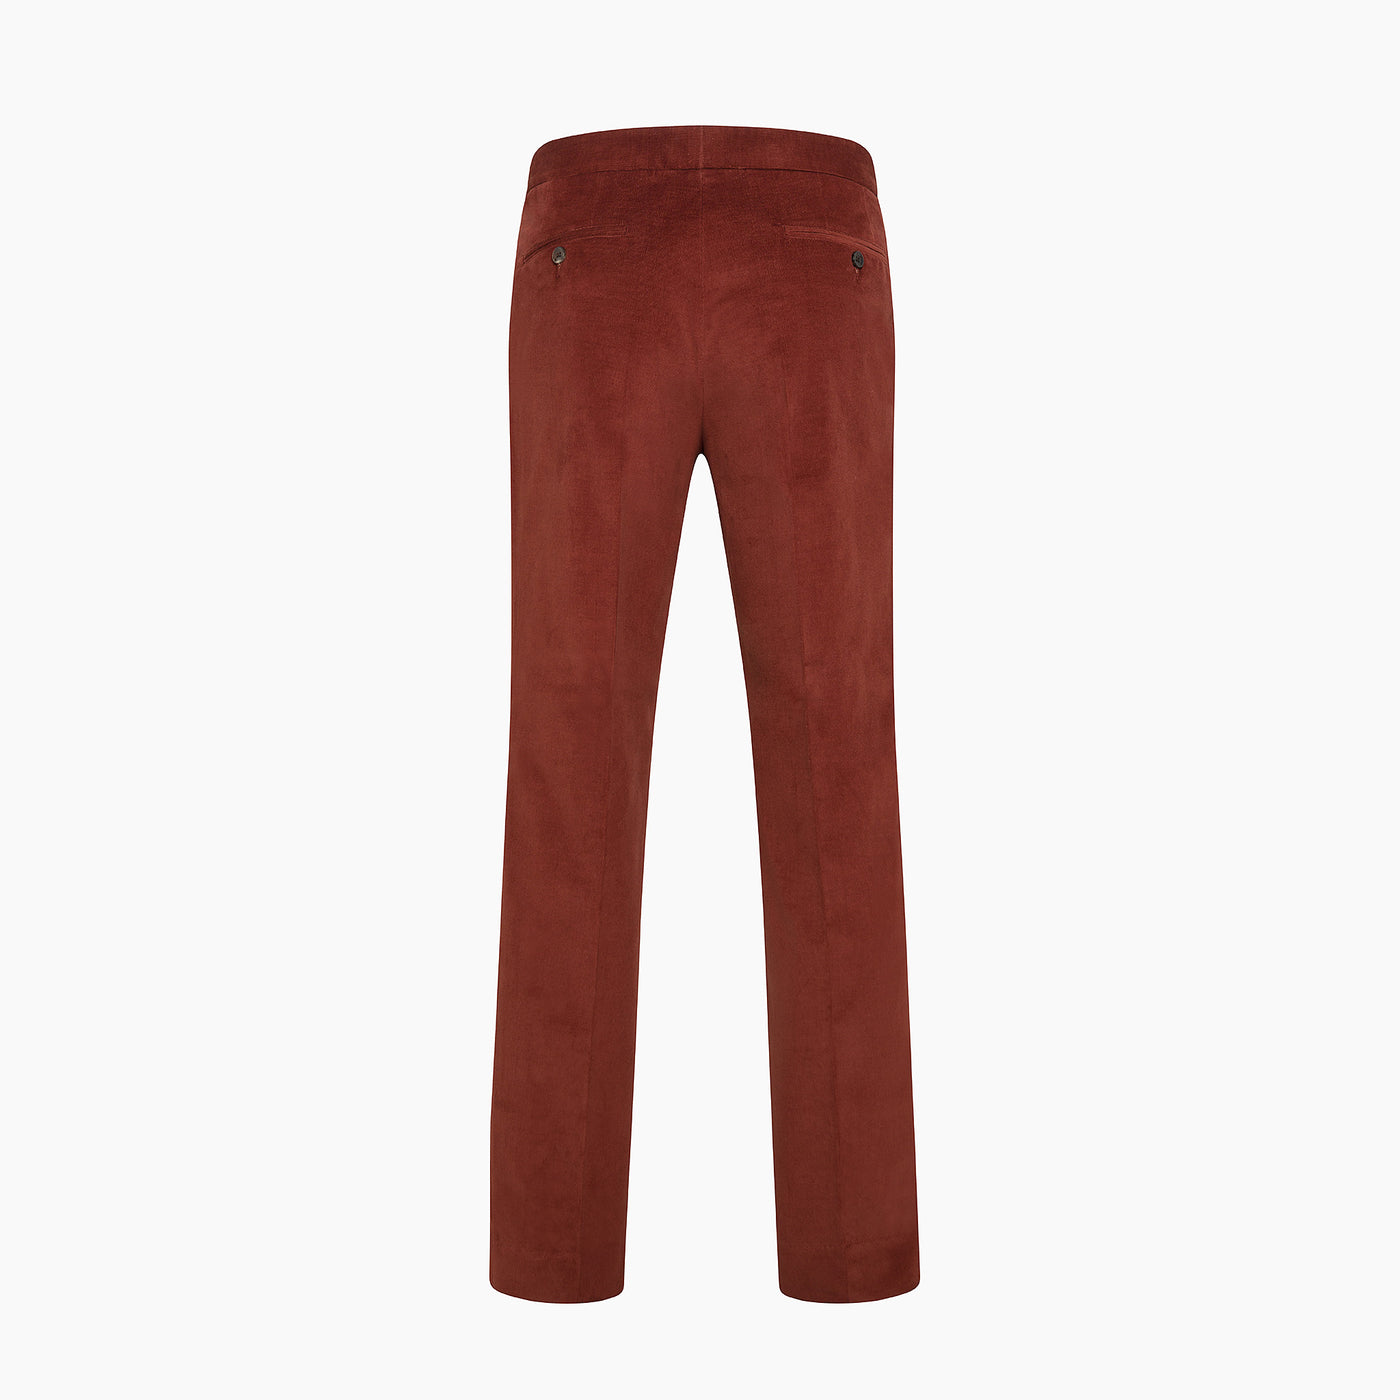 Gary Pleated Chino Pants in Soft Luxury Corduroy